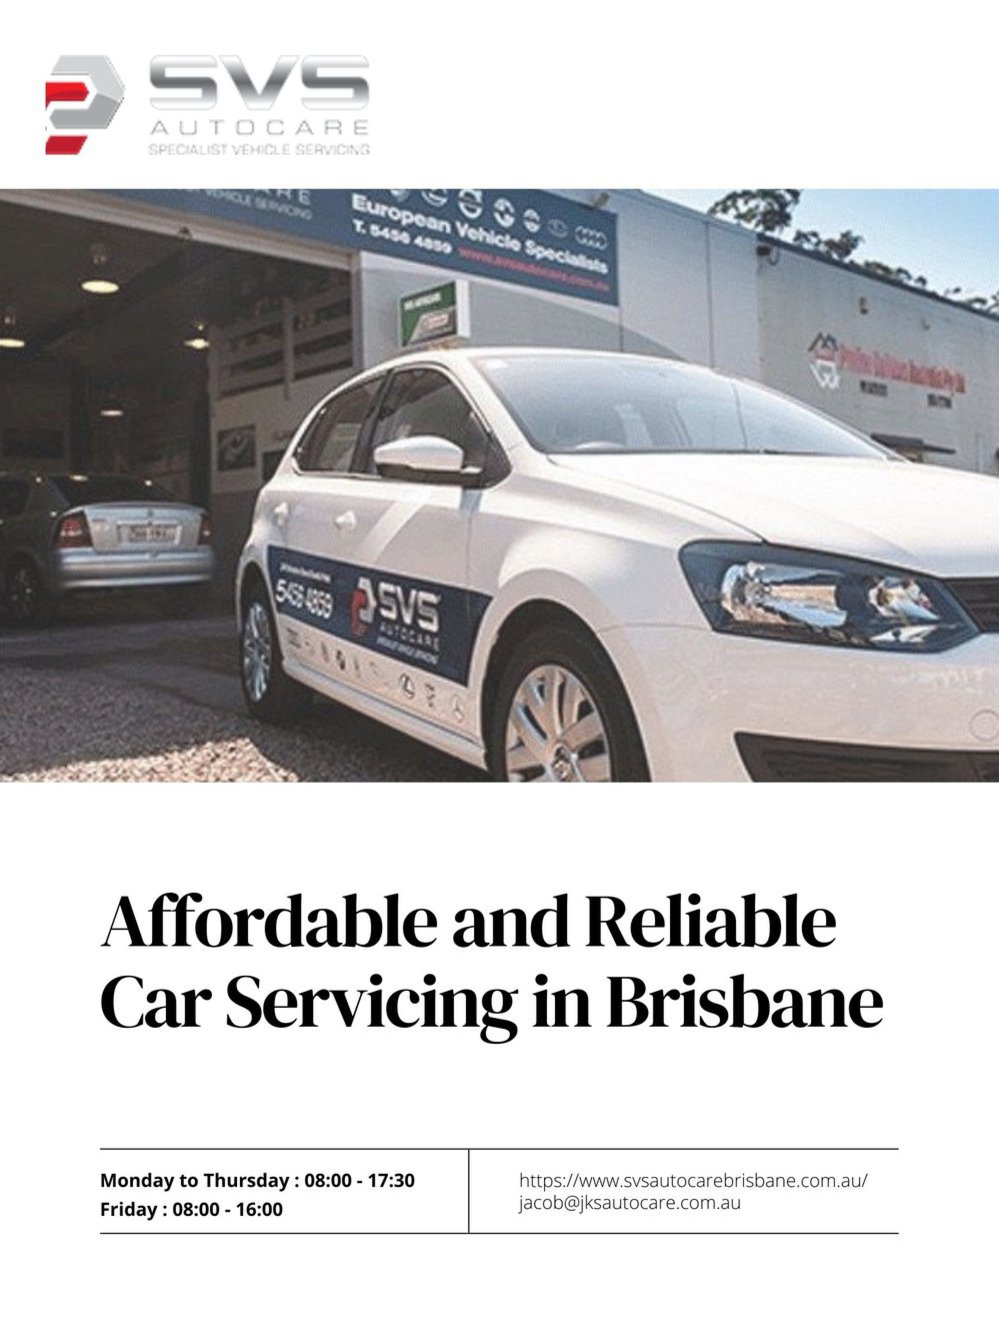 SVS Autocare Brisbane cover